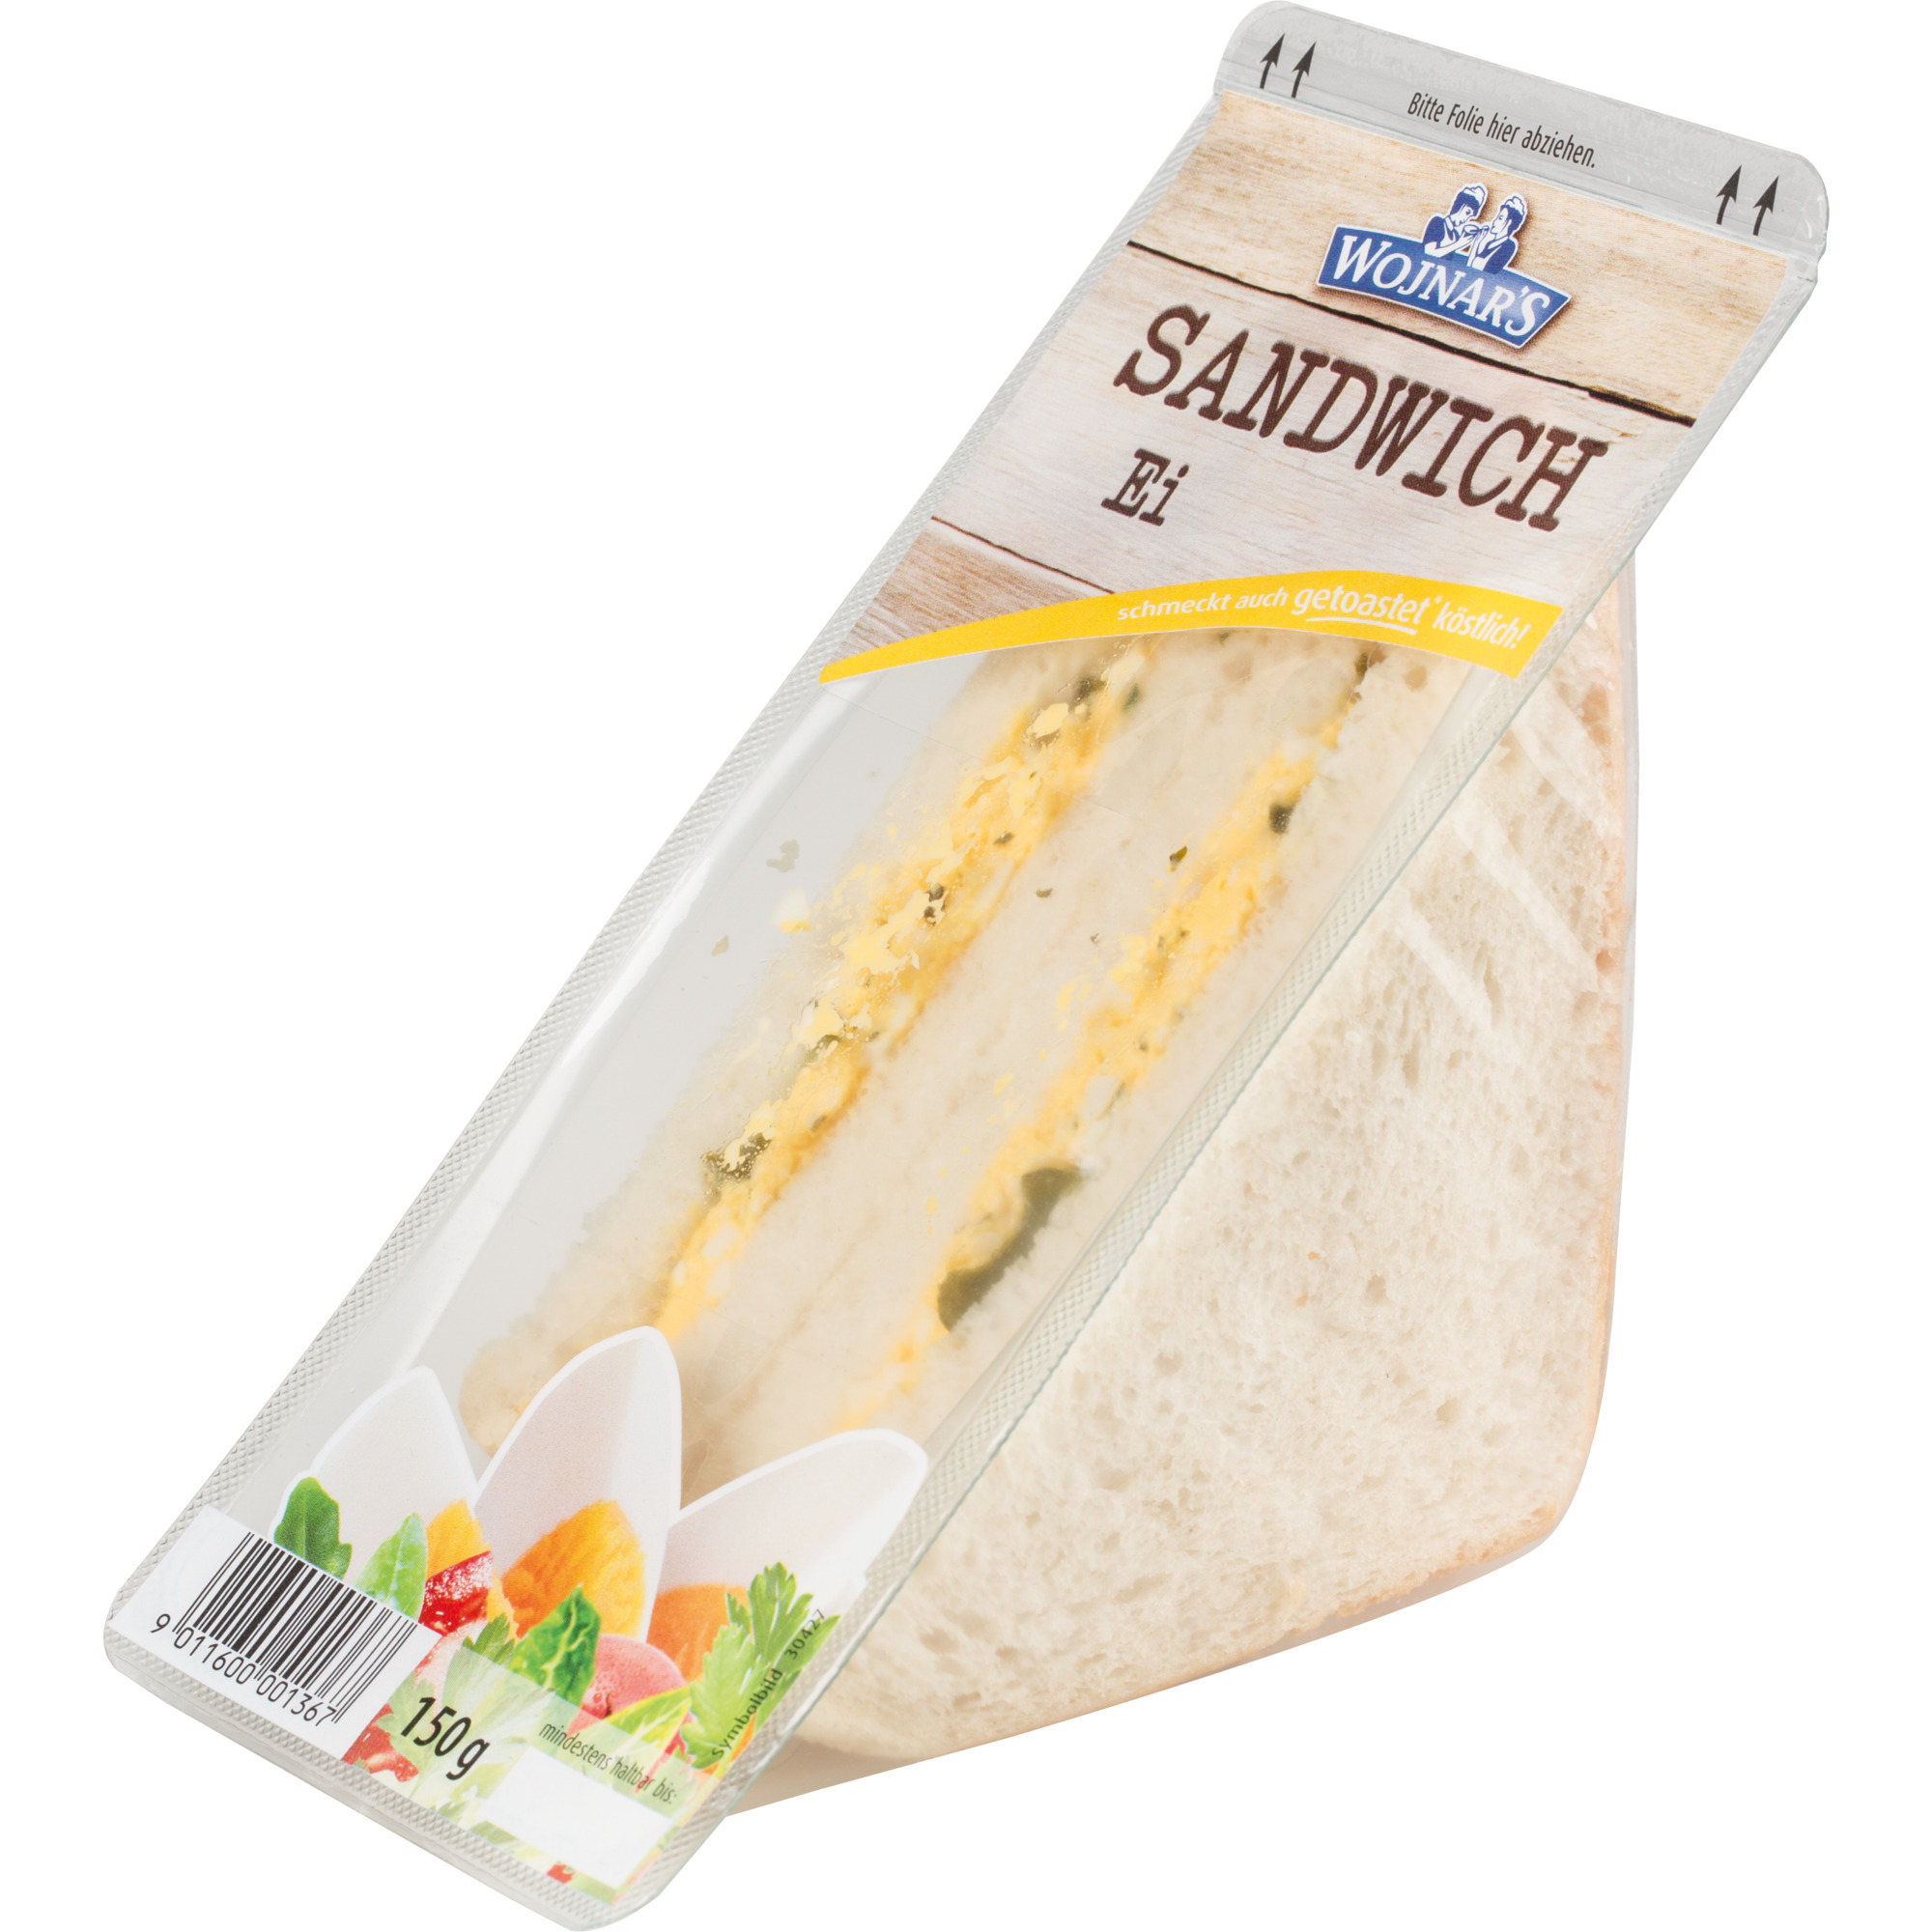 Wojnar's Sandwich 150g, Ei